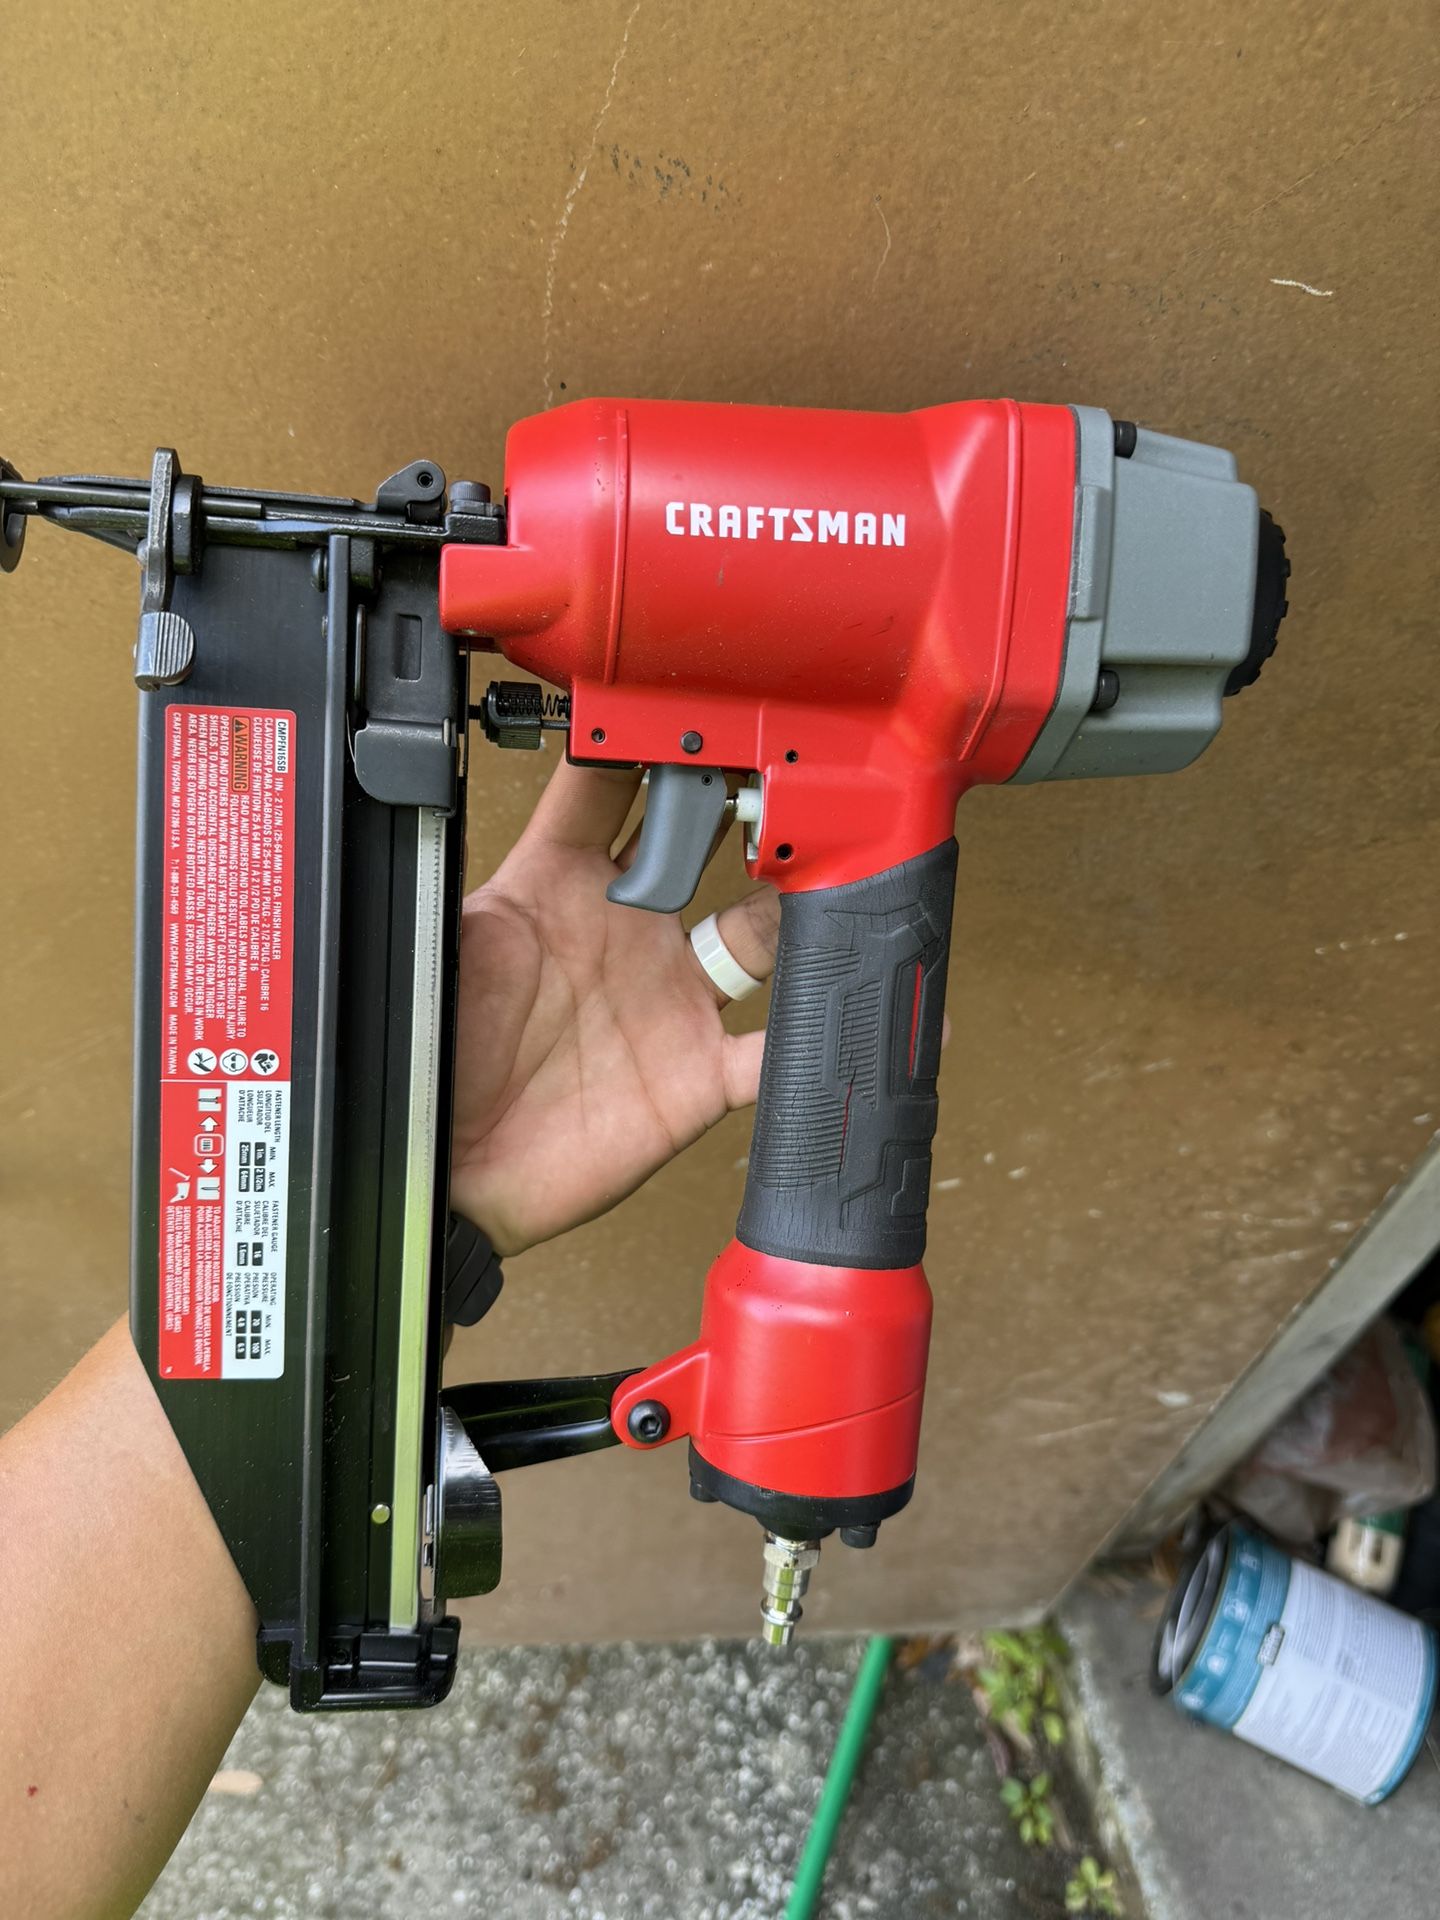 Craftsman 16ga Nailer Nail Gun